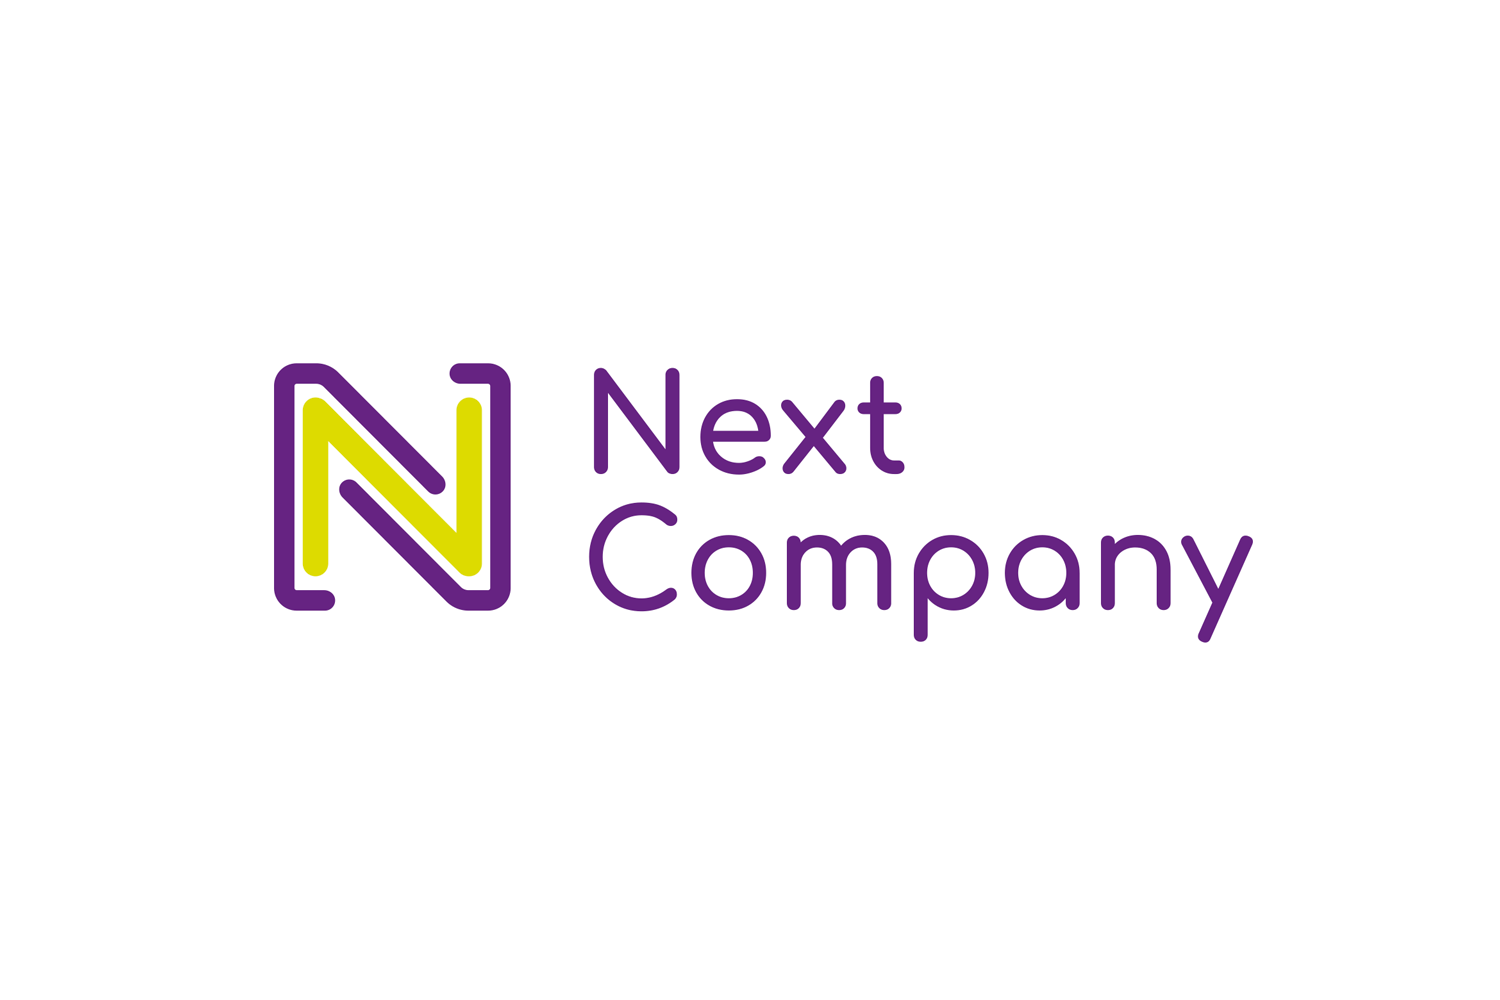 Next Company Logo Template